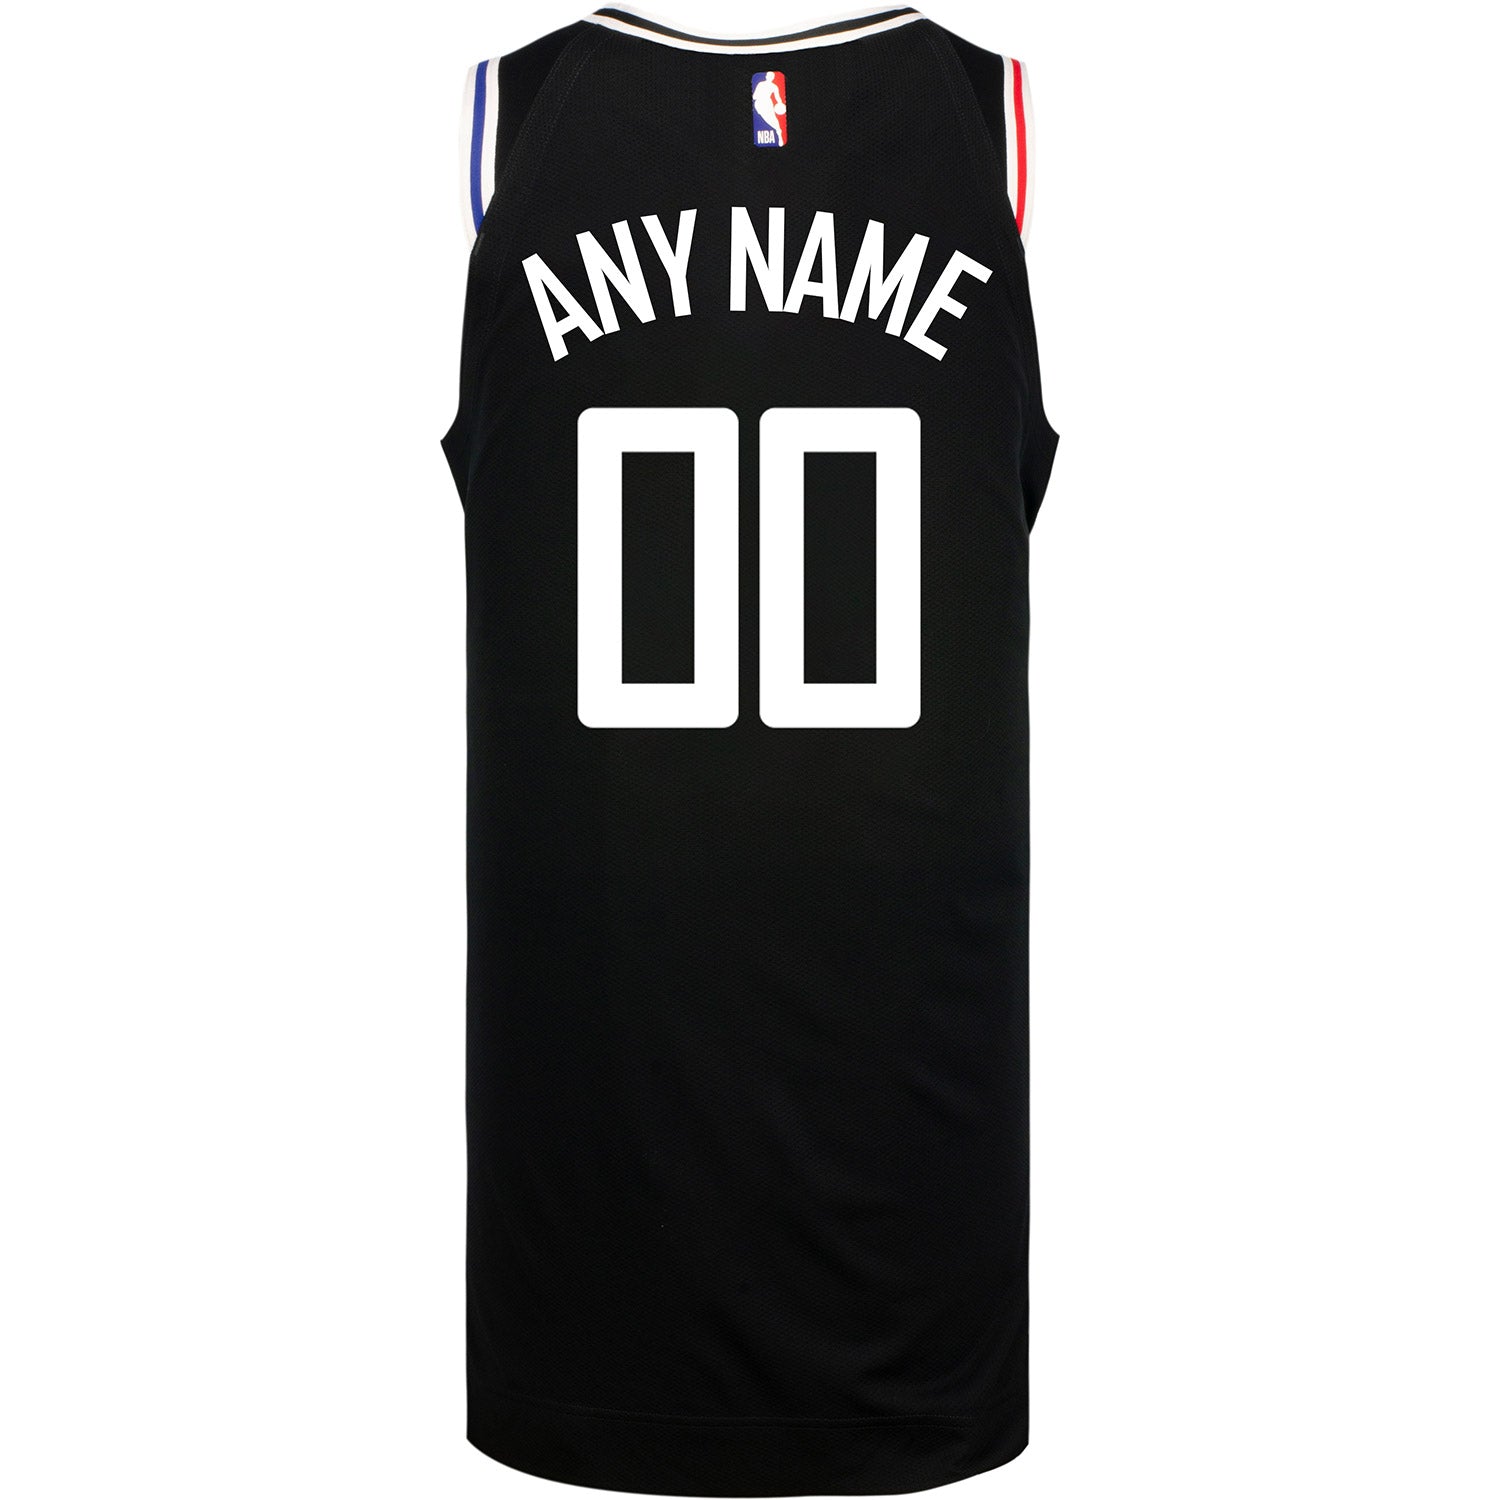 2022-23 LA Clippers City Edition Personalized Nike Swingman Jersey